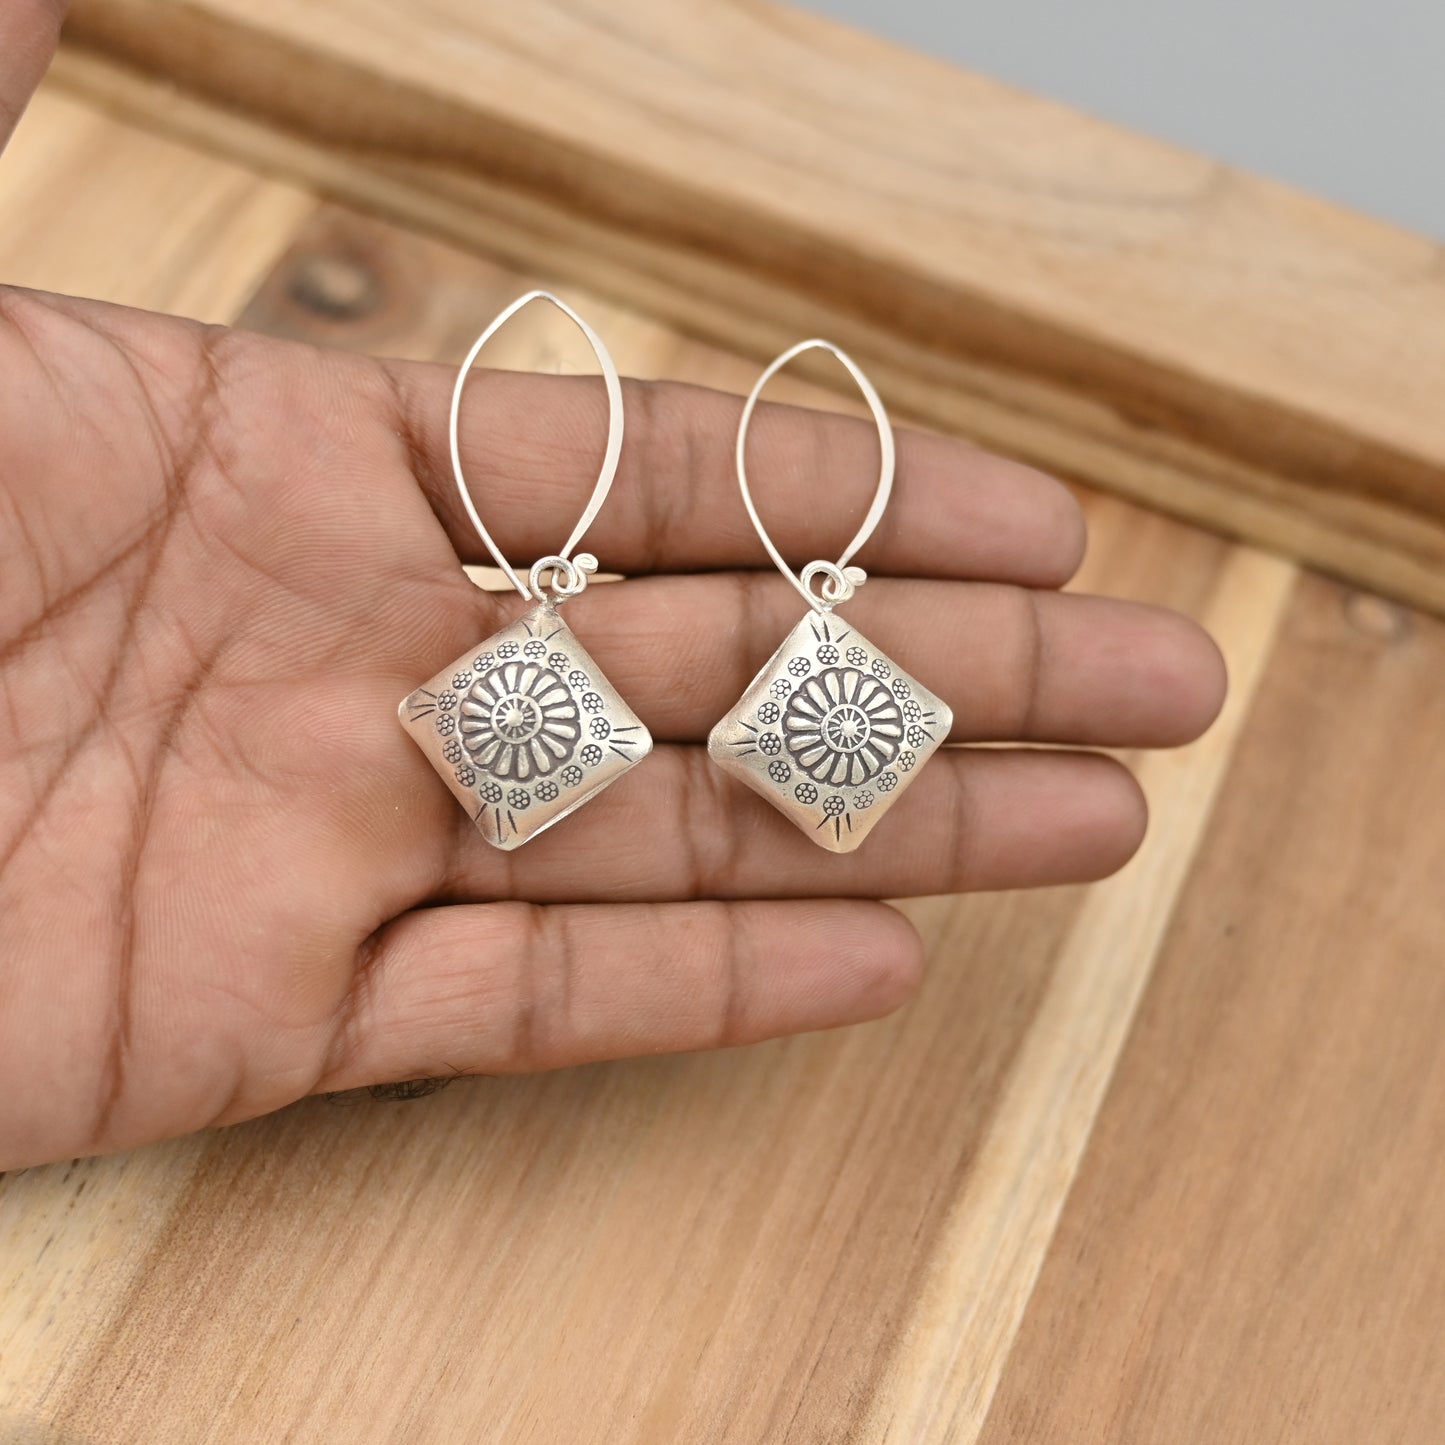 Square Drop Earrings! 🔳✨